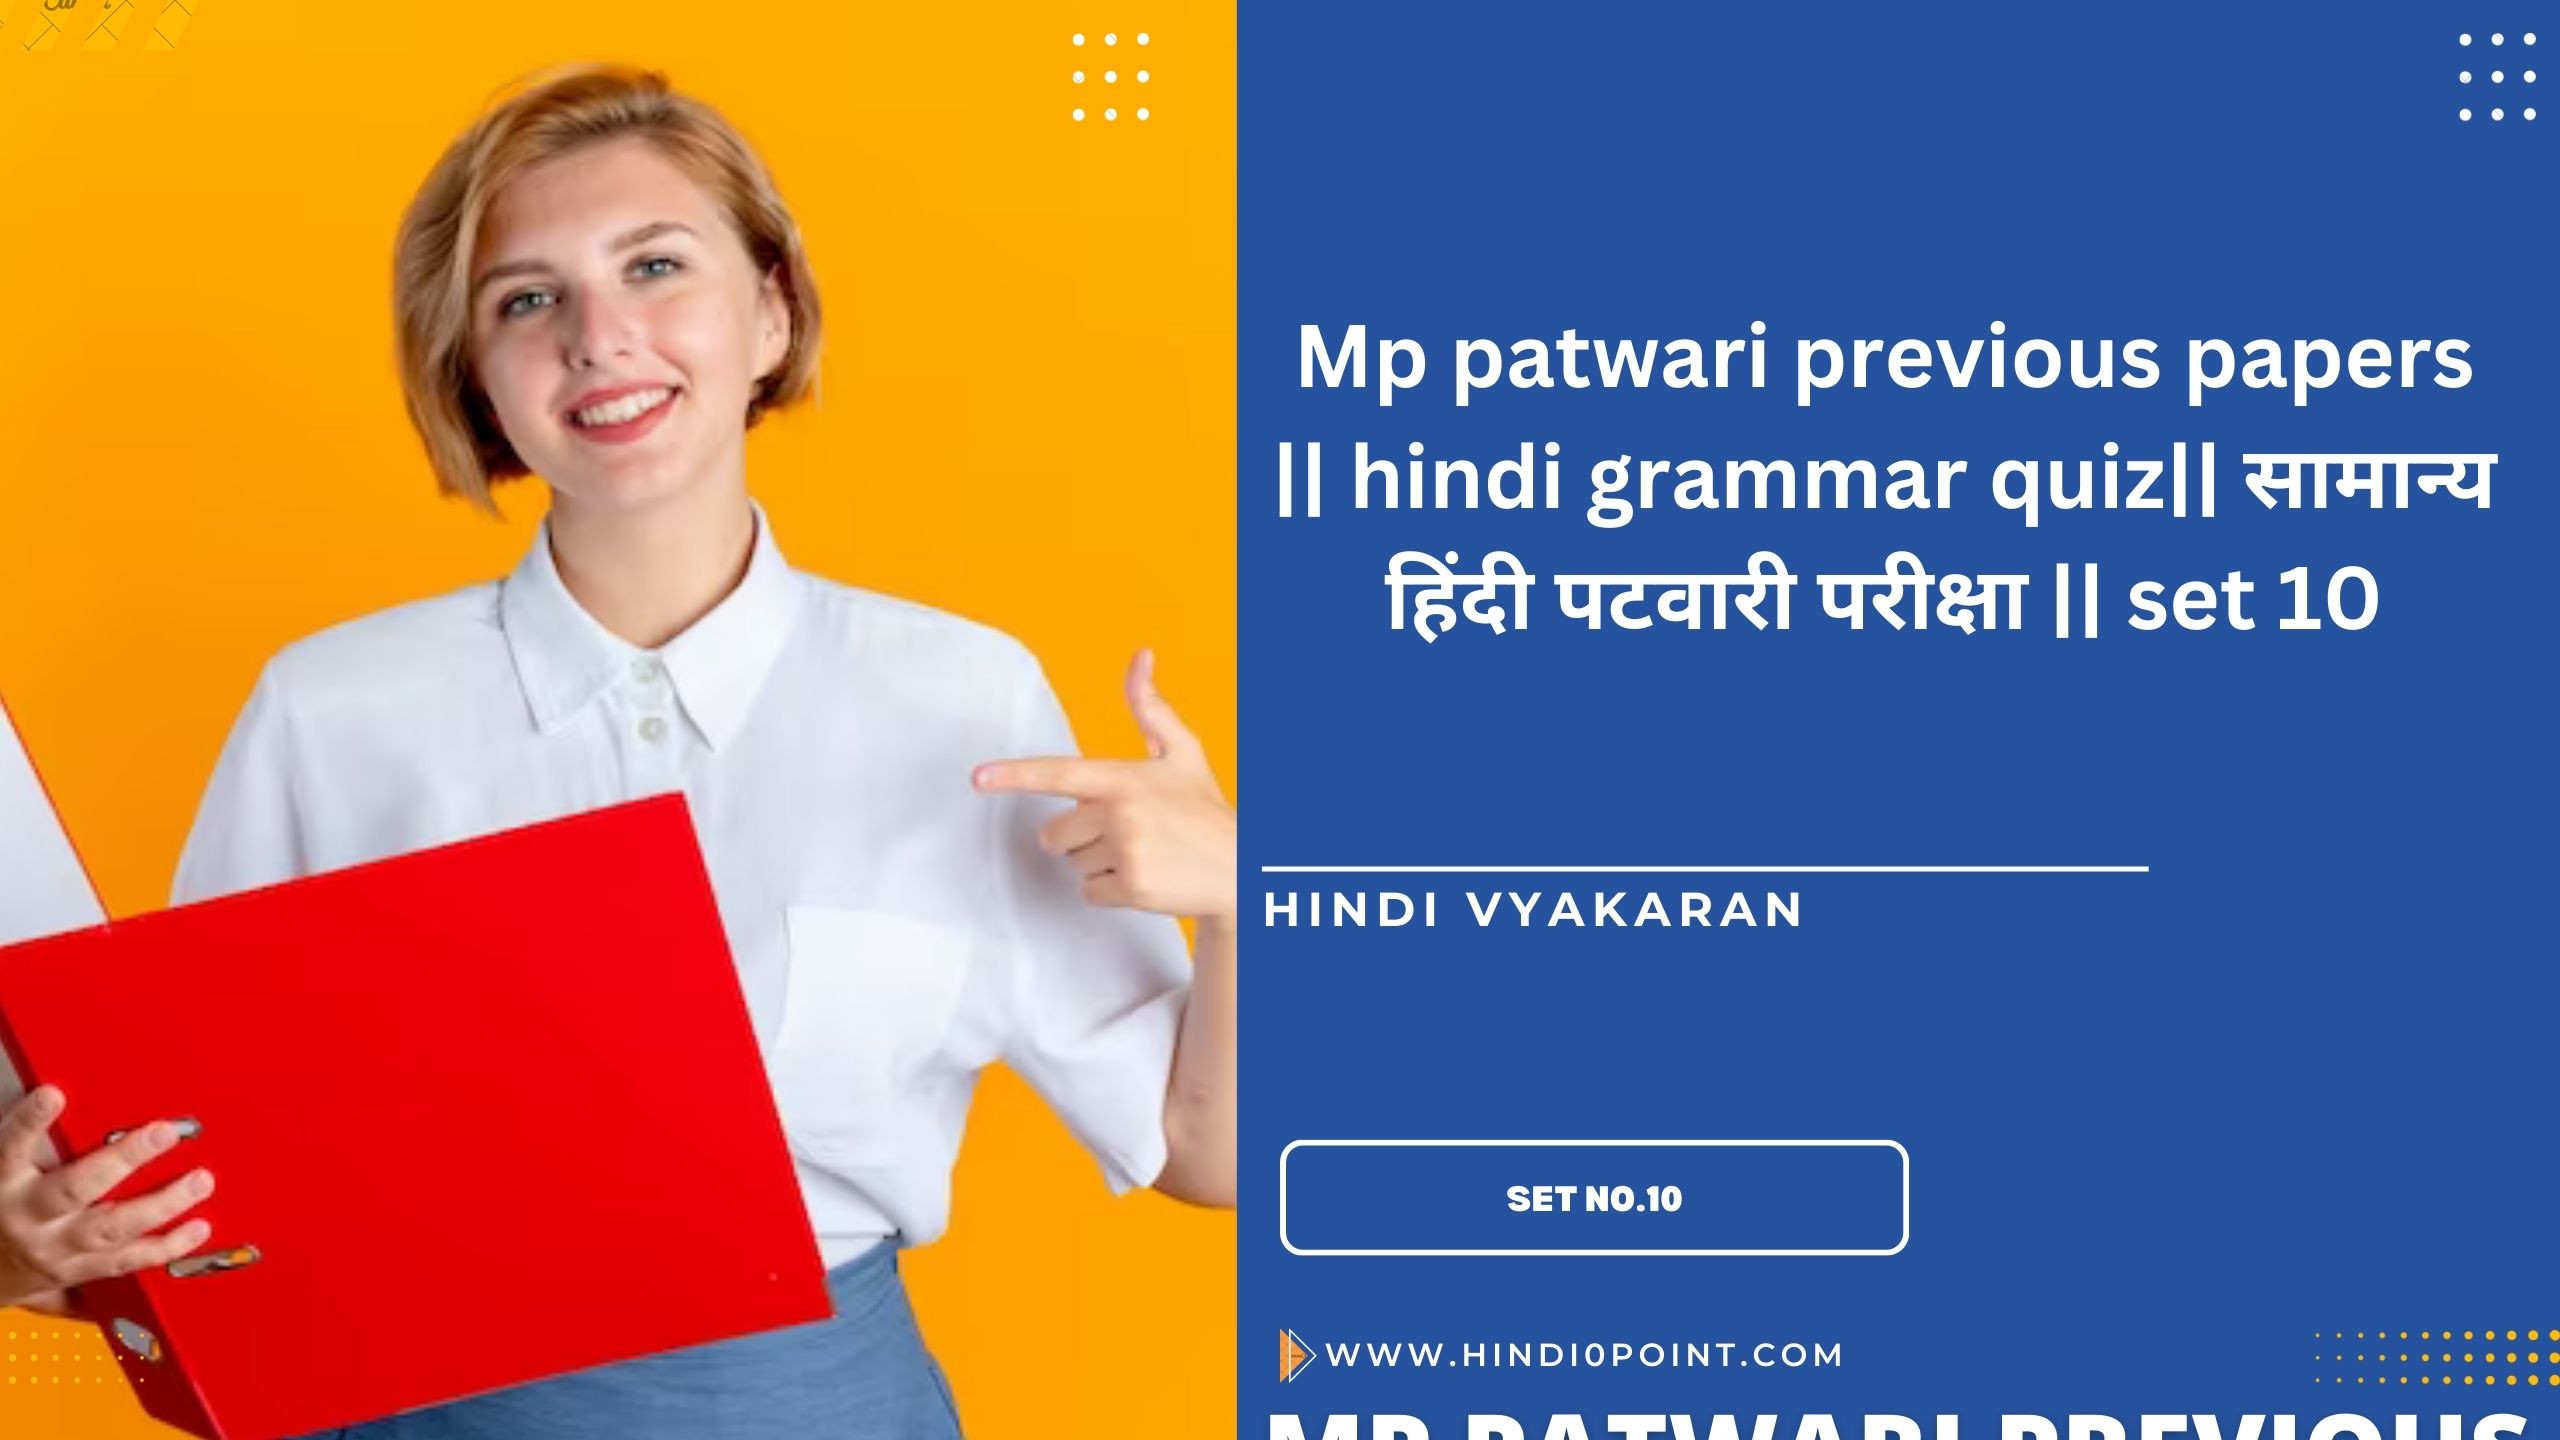 Mp patwari previous papers || hindi grammar quiz|| सामान्य हिंदी पटवारी परीक्षा || set 10